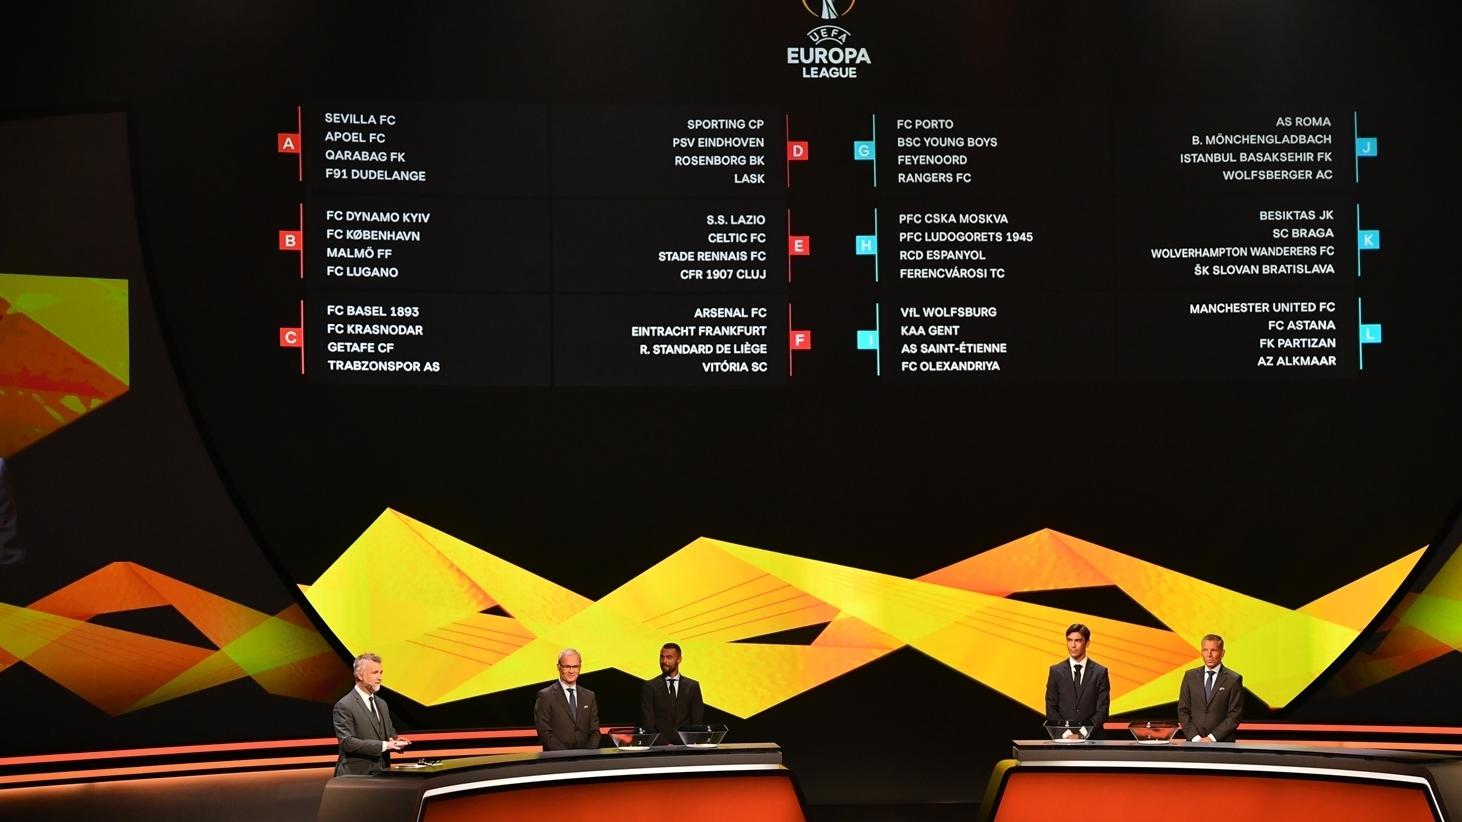 Europa League Group Stage Draw Made In Monaco Uefa Europa League